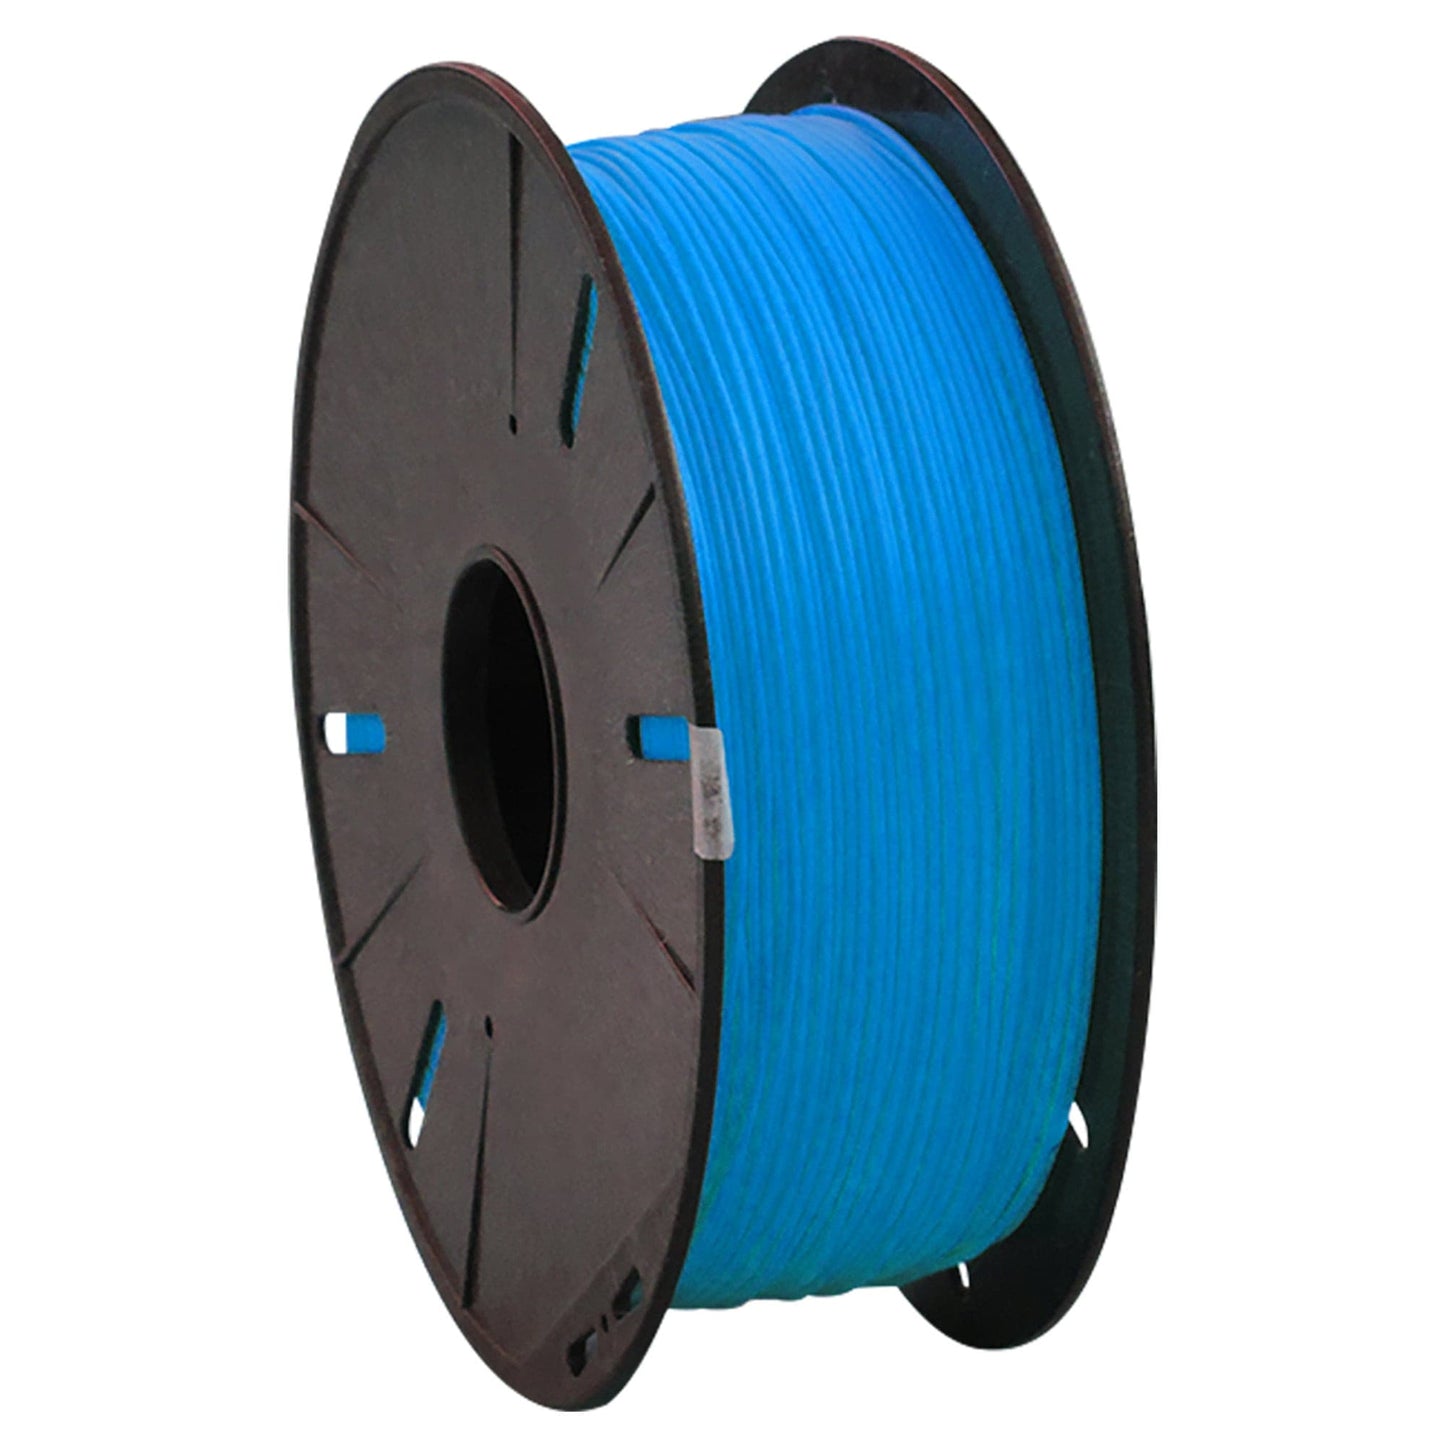 ABS Sky Blue 1.75 mm filament